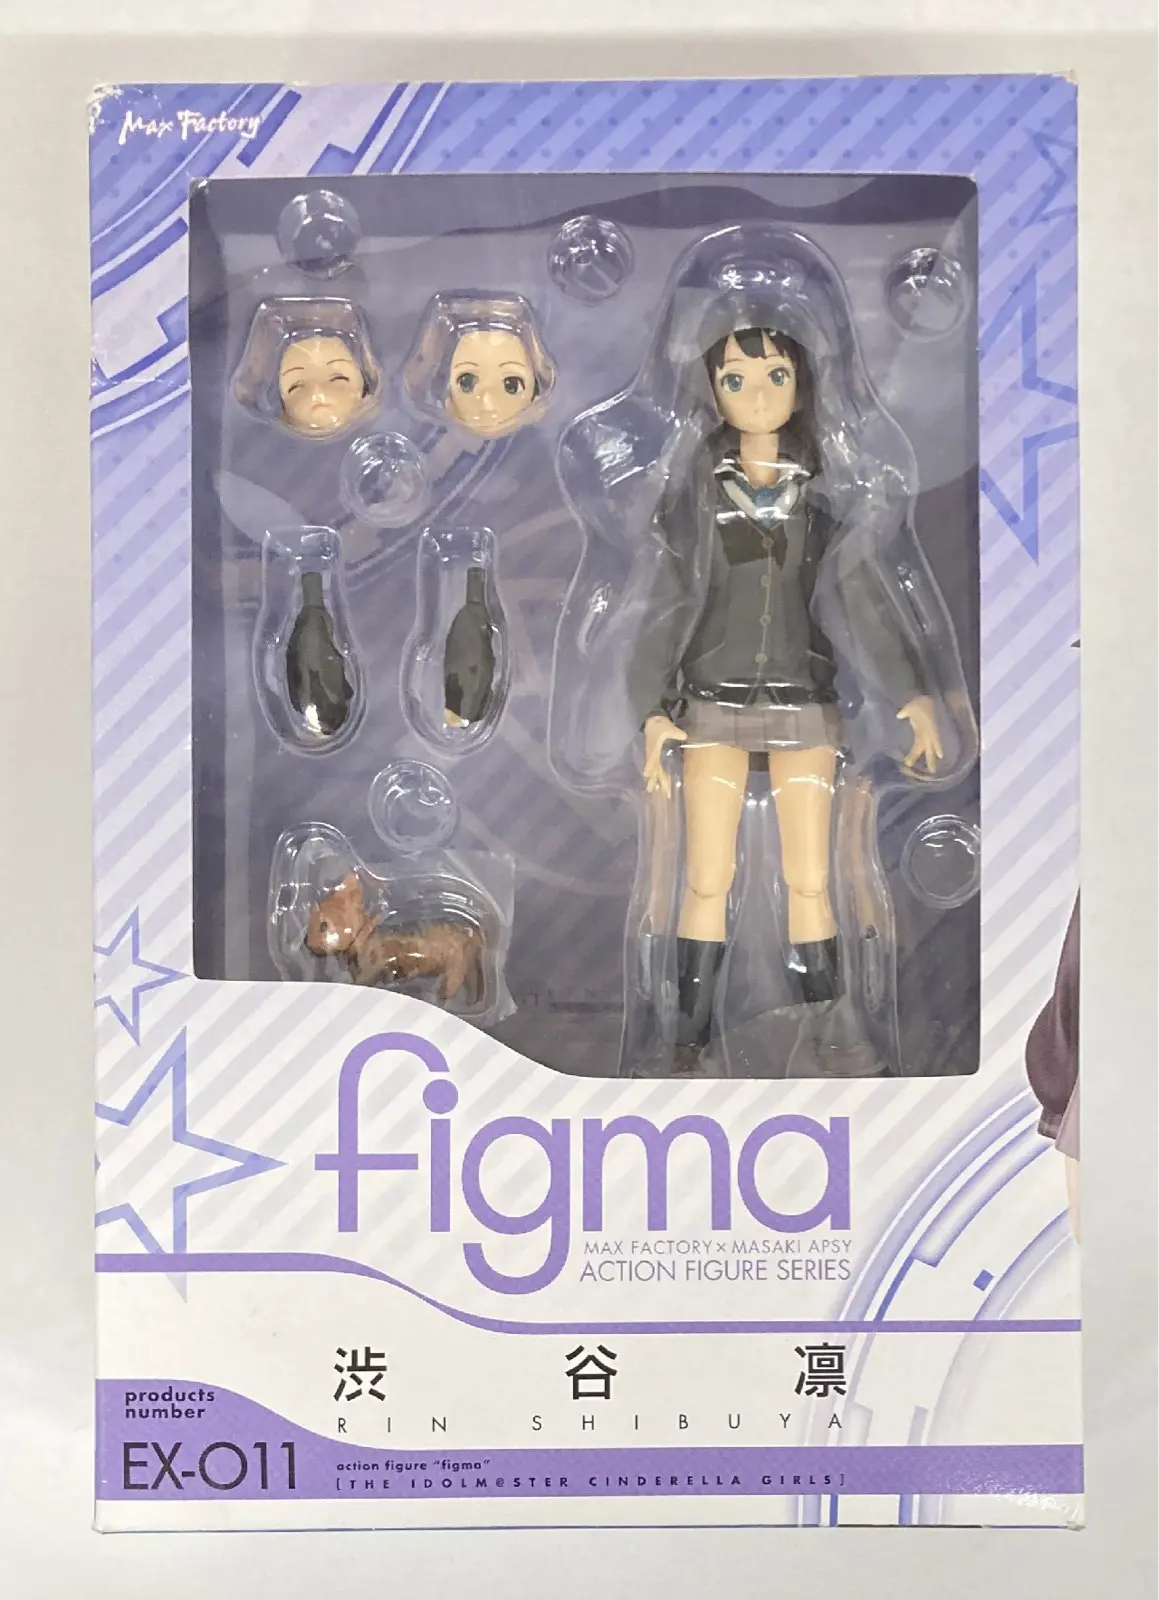 figma - The iDOLM@STER Cinderella Girls / Shibuya Rin